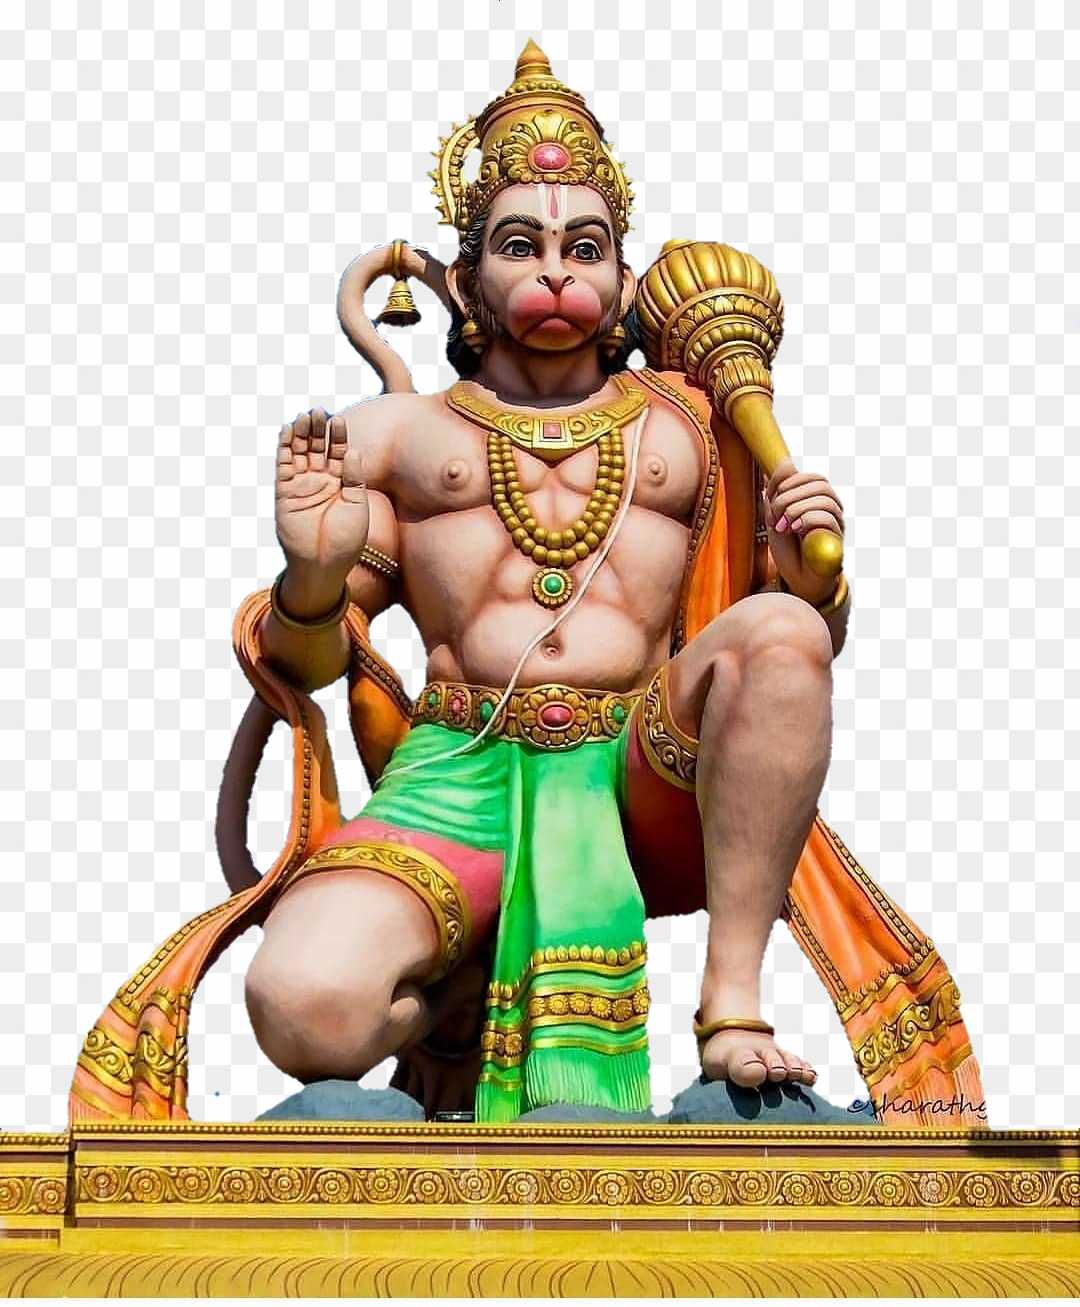 Hanumanji PNG Images, Transparent Hanumanji Image Download - PNGitem